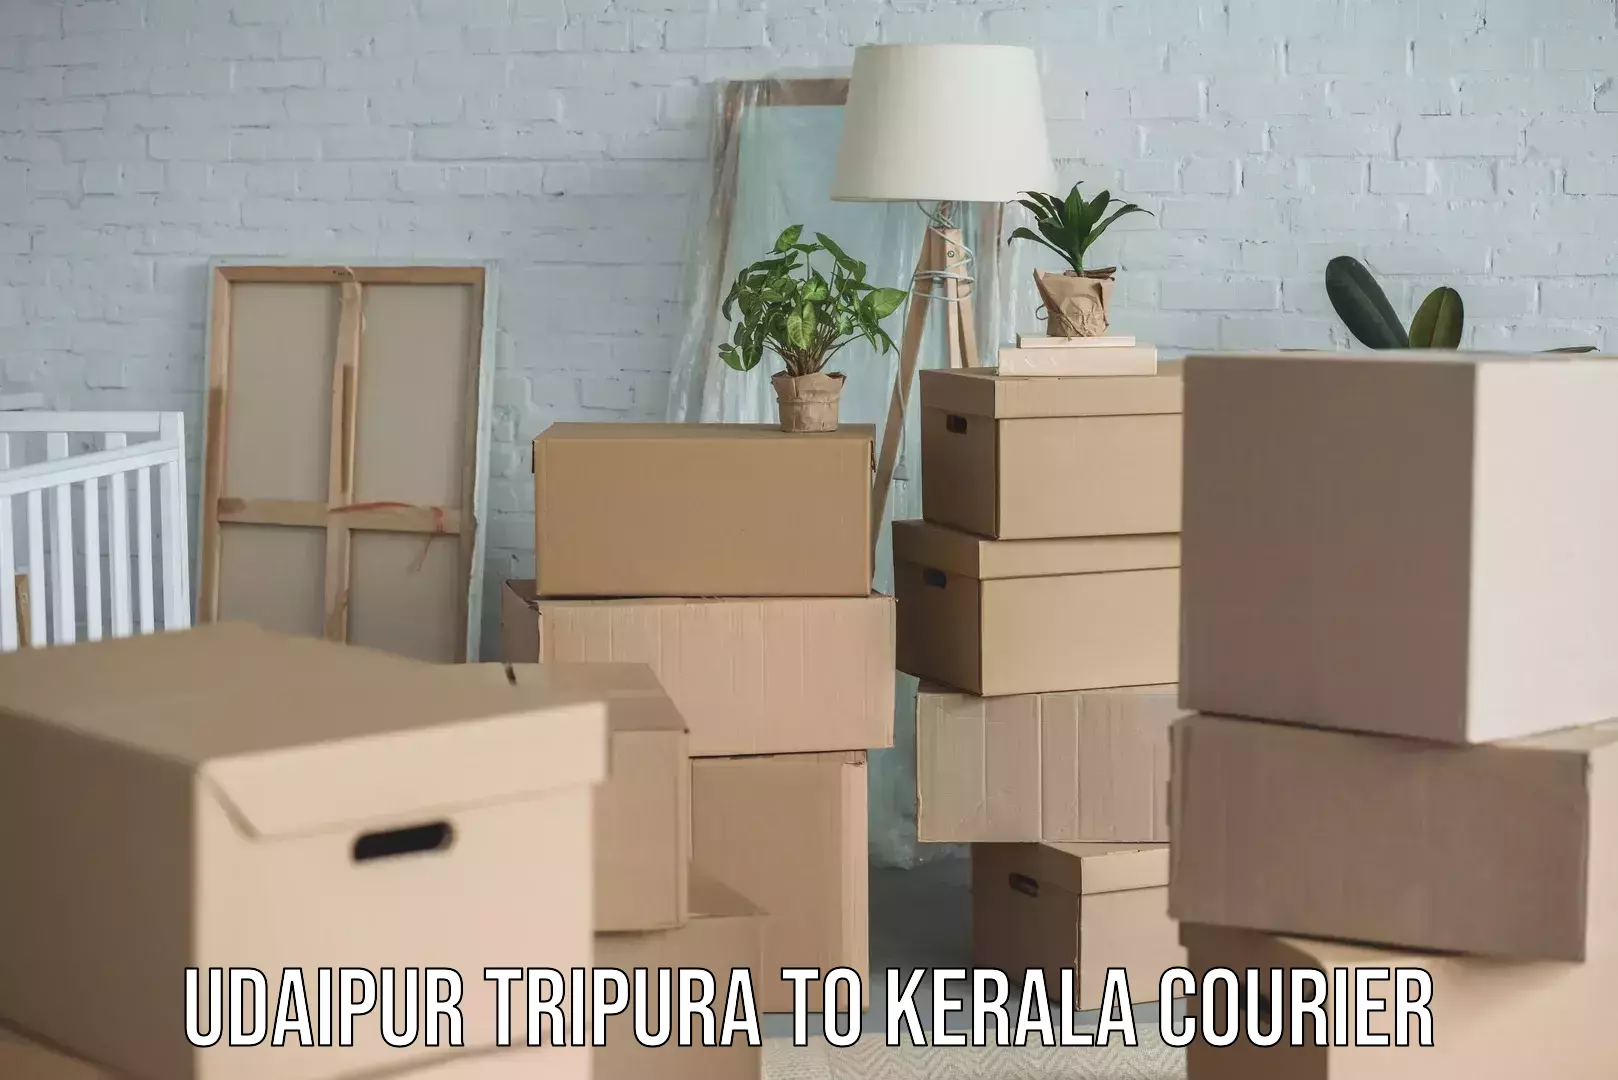 Logistics and distribution Udaipur Tripura to Kerala